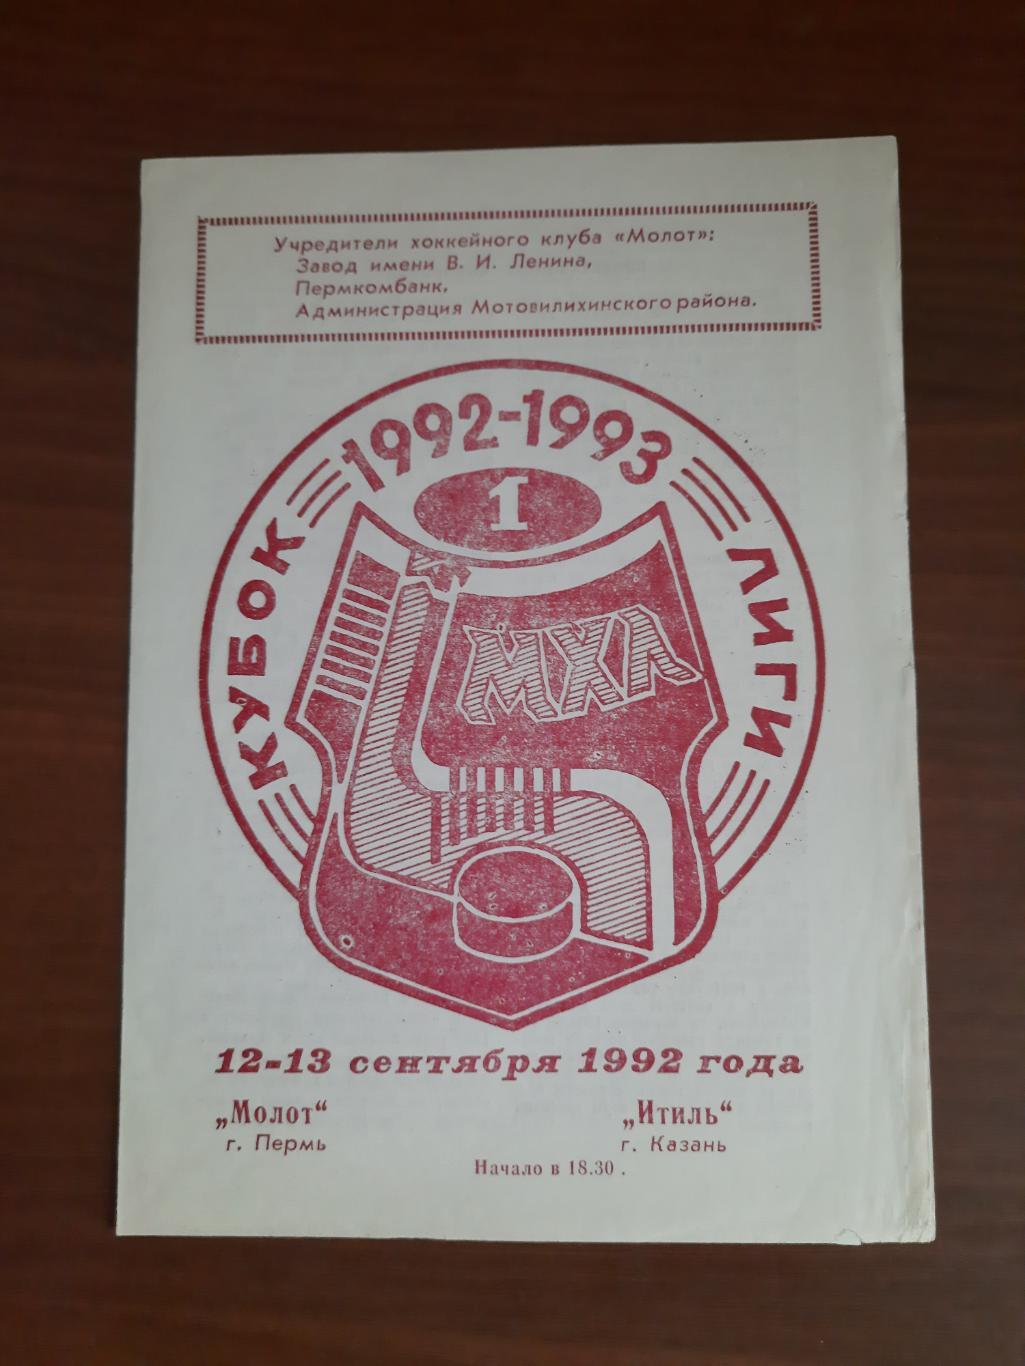 Молот Пермь Итиль Казань 12-13.09.1992